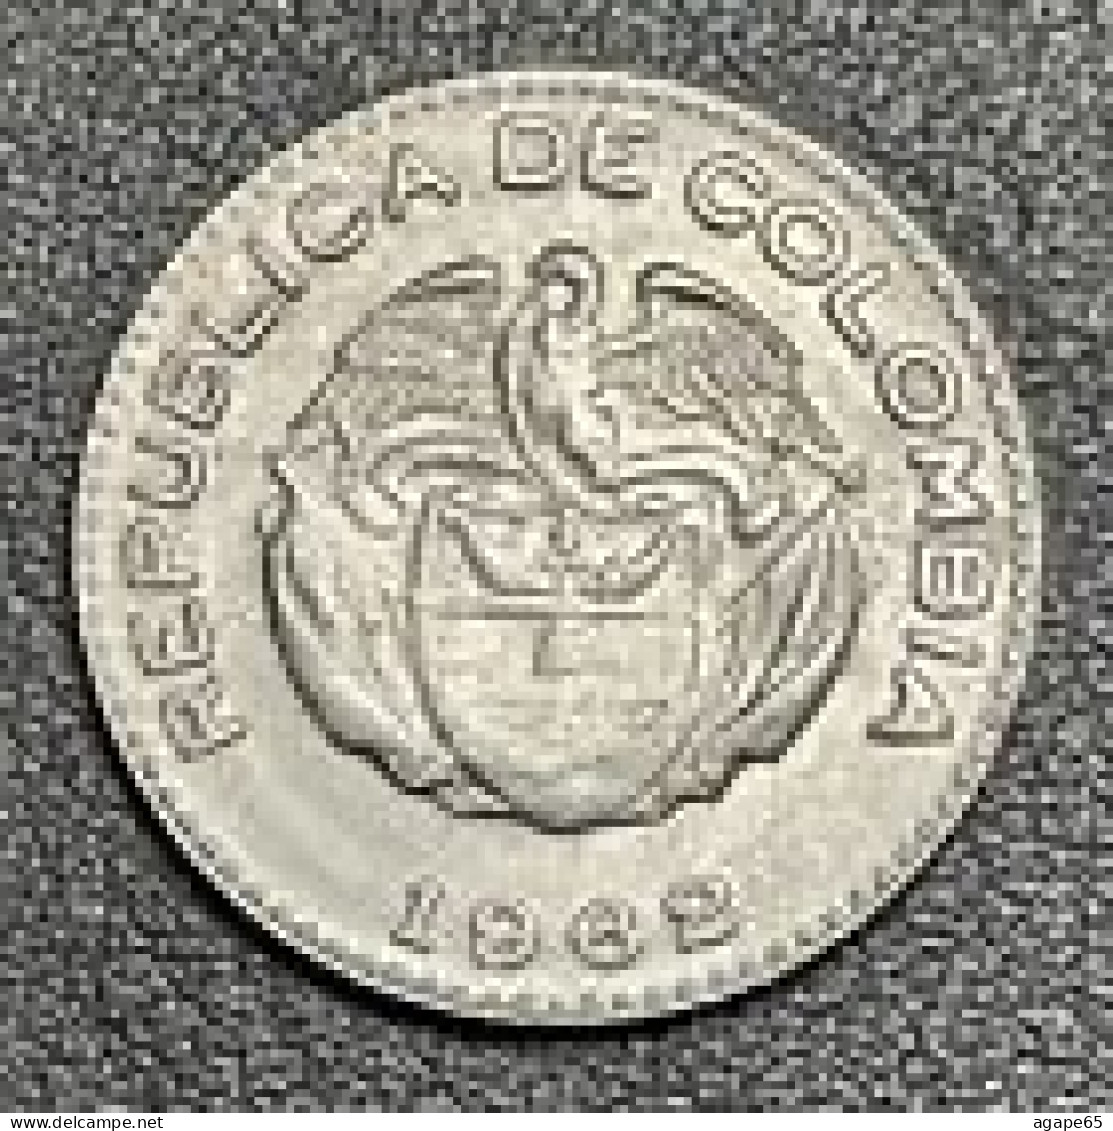 10 Centavos, Colombia, 1962 - Colombia